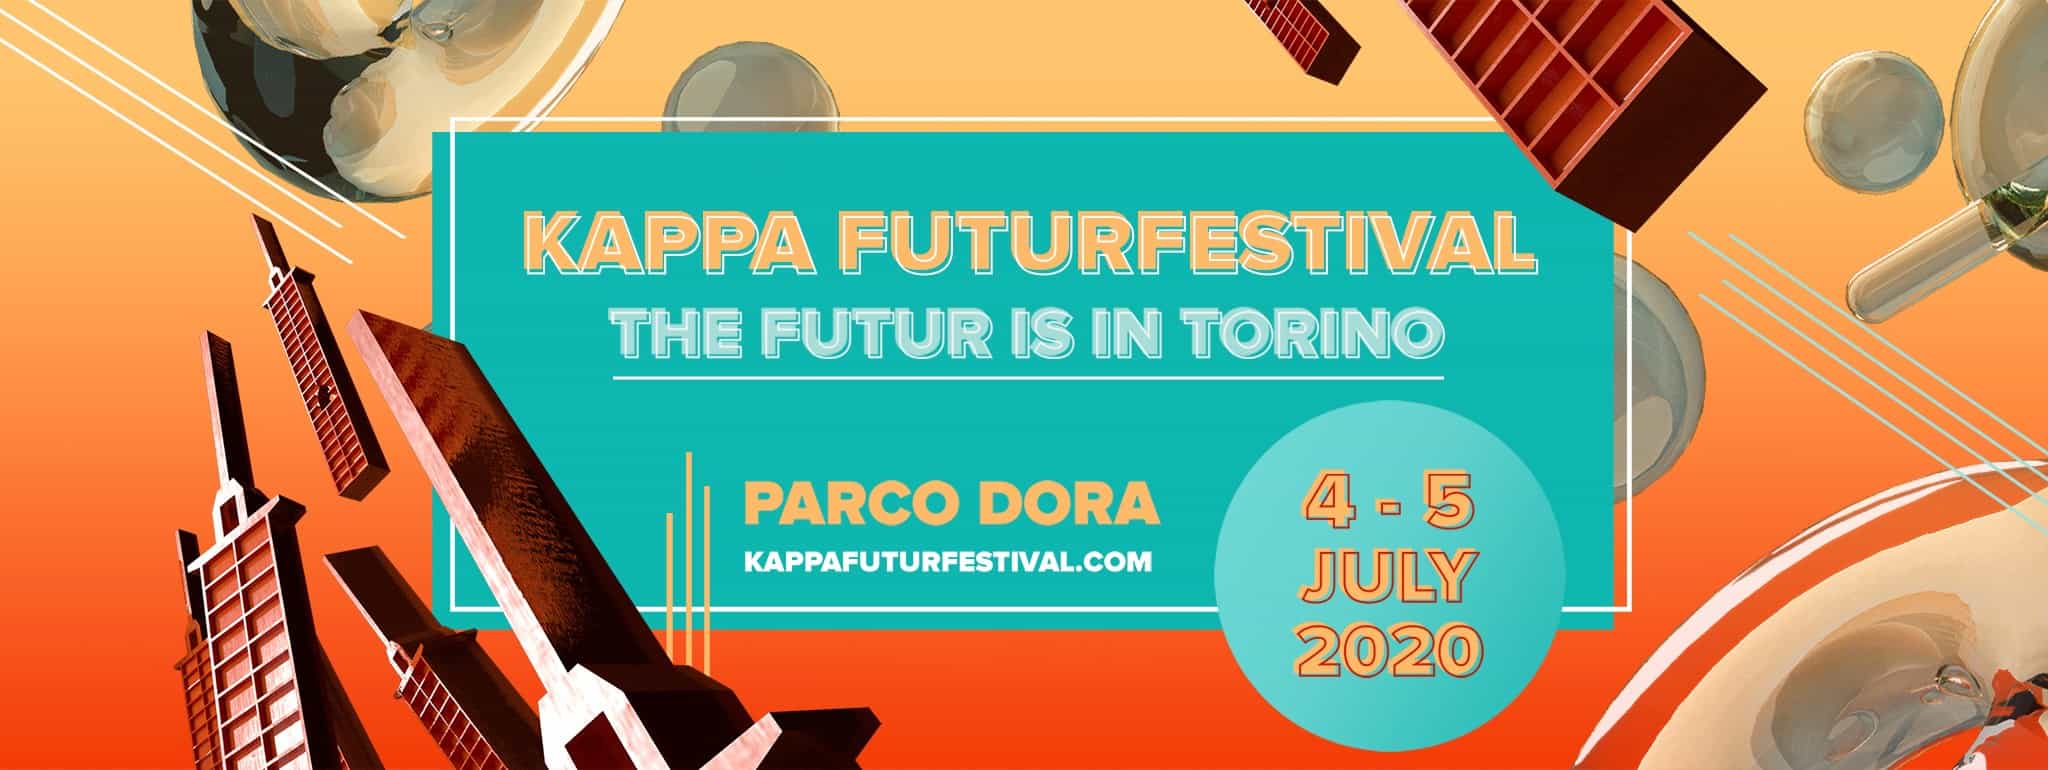 Kappa FuturFestival 2020 - Banner